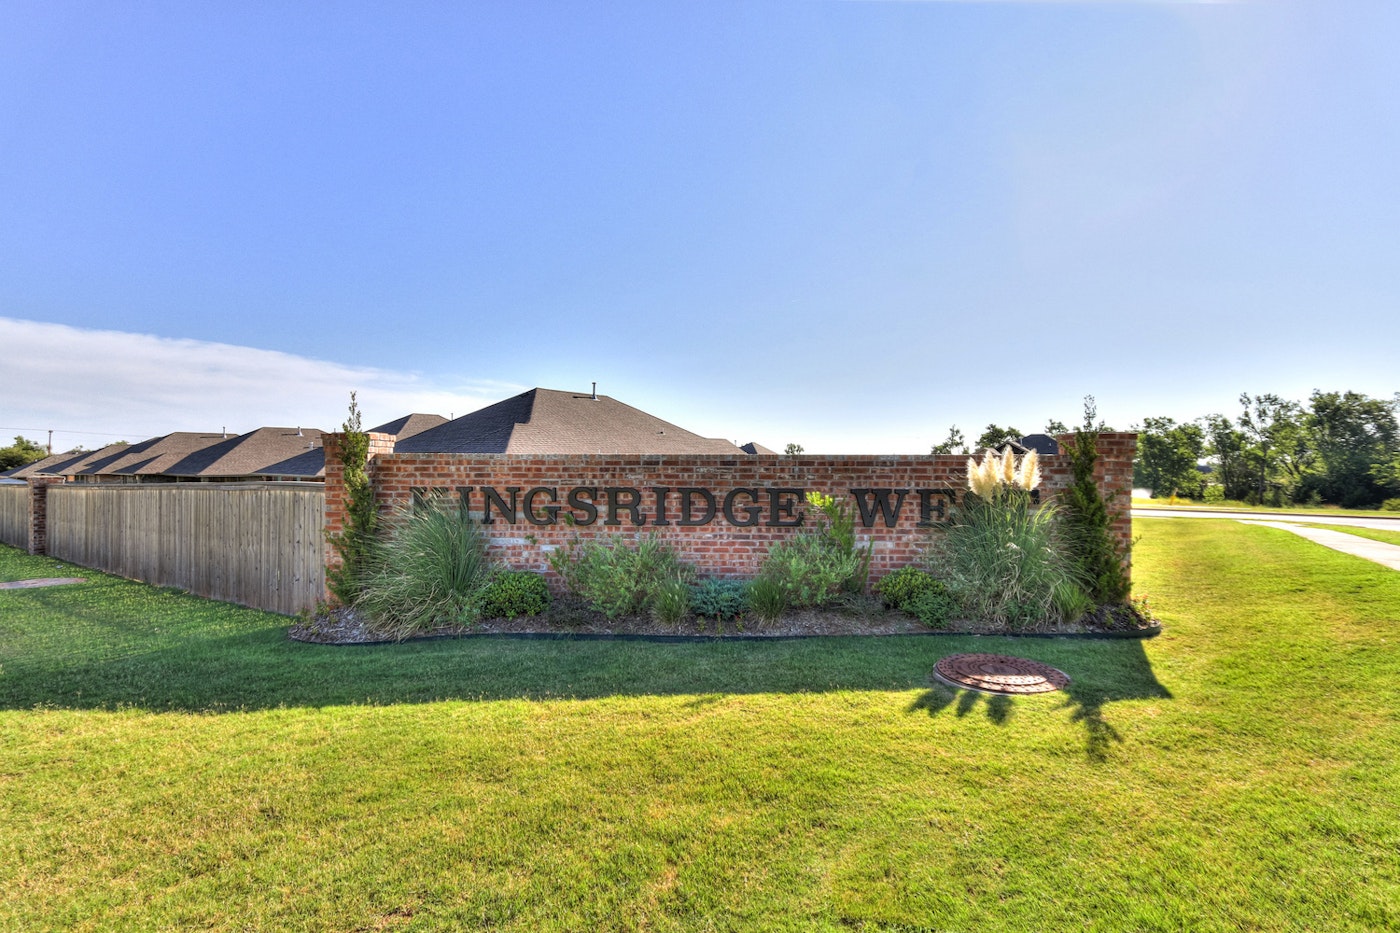 Kingsridge West Neighborhood Oklahoma City Ok 73170 Nested Tours